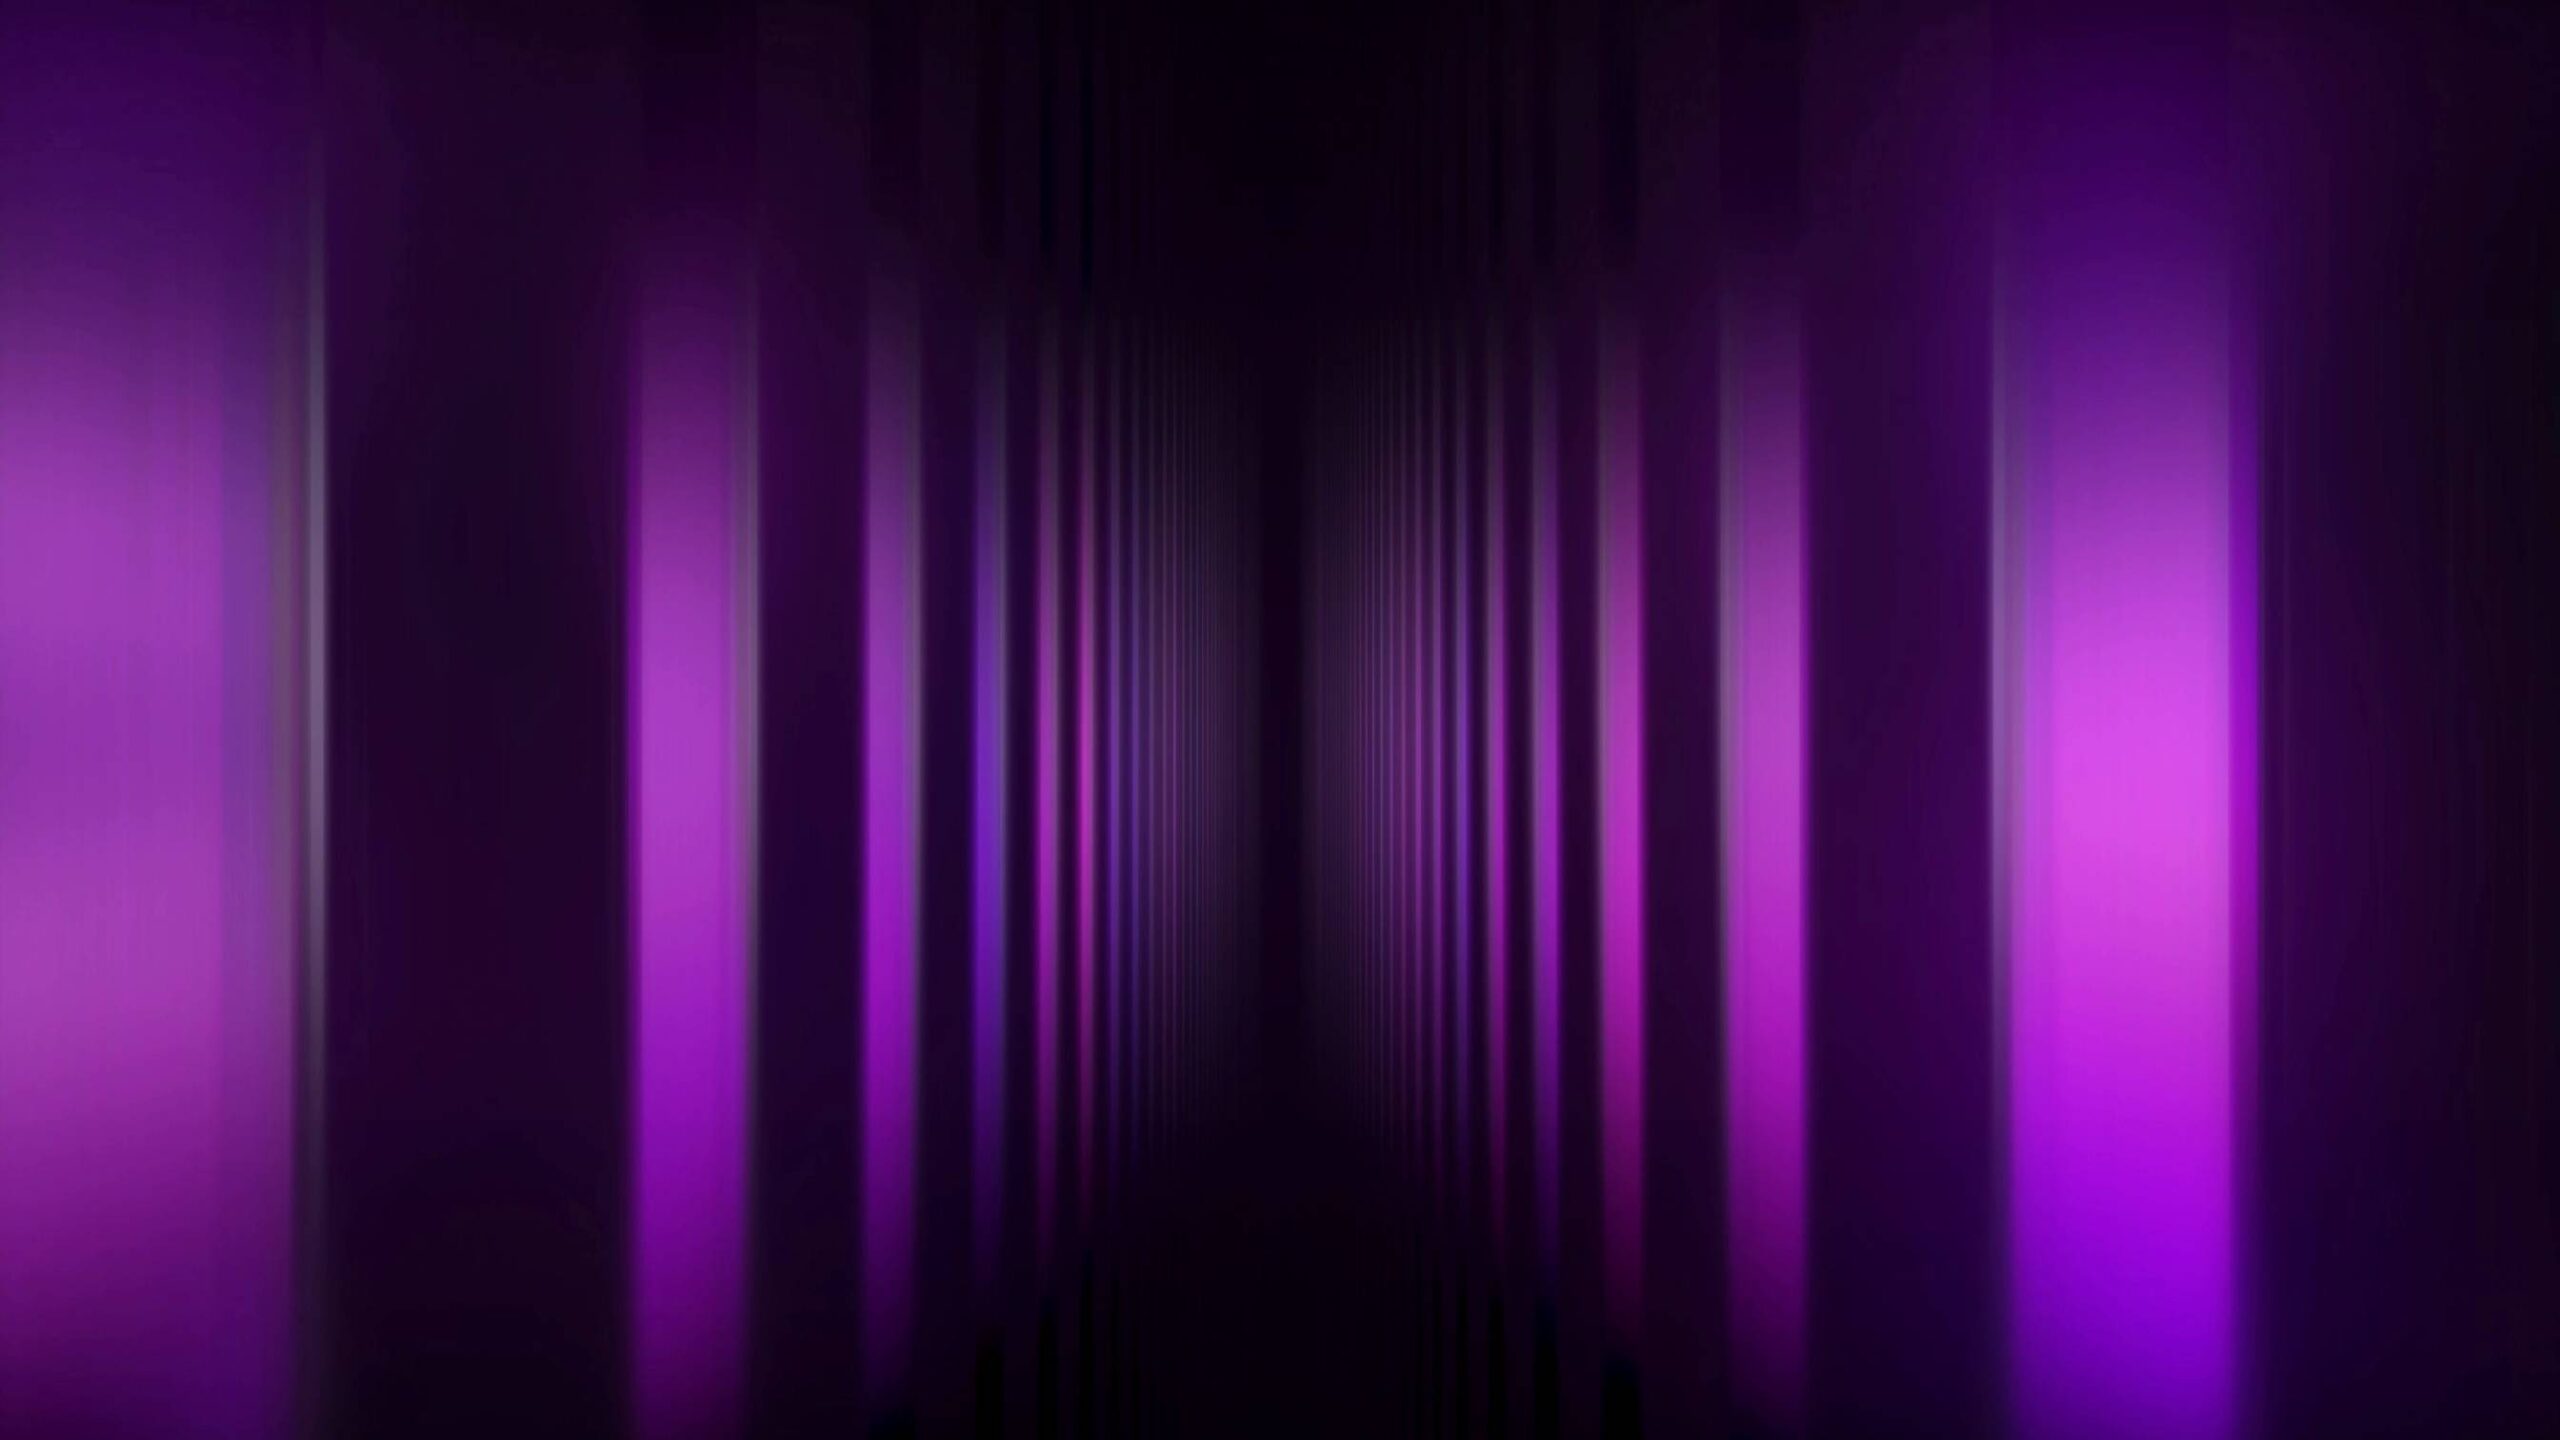 4K Flickering Purple Lights Motion Background || VFX Free To Use 4K Screensaver || FREE DOWNLOAD